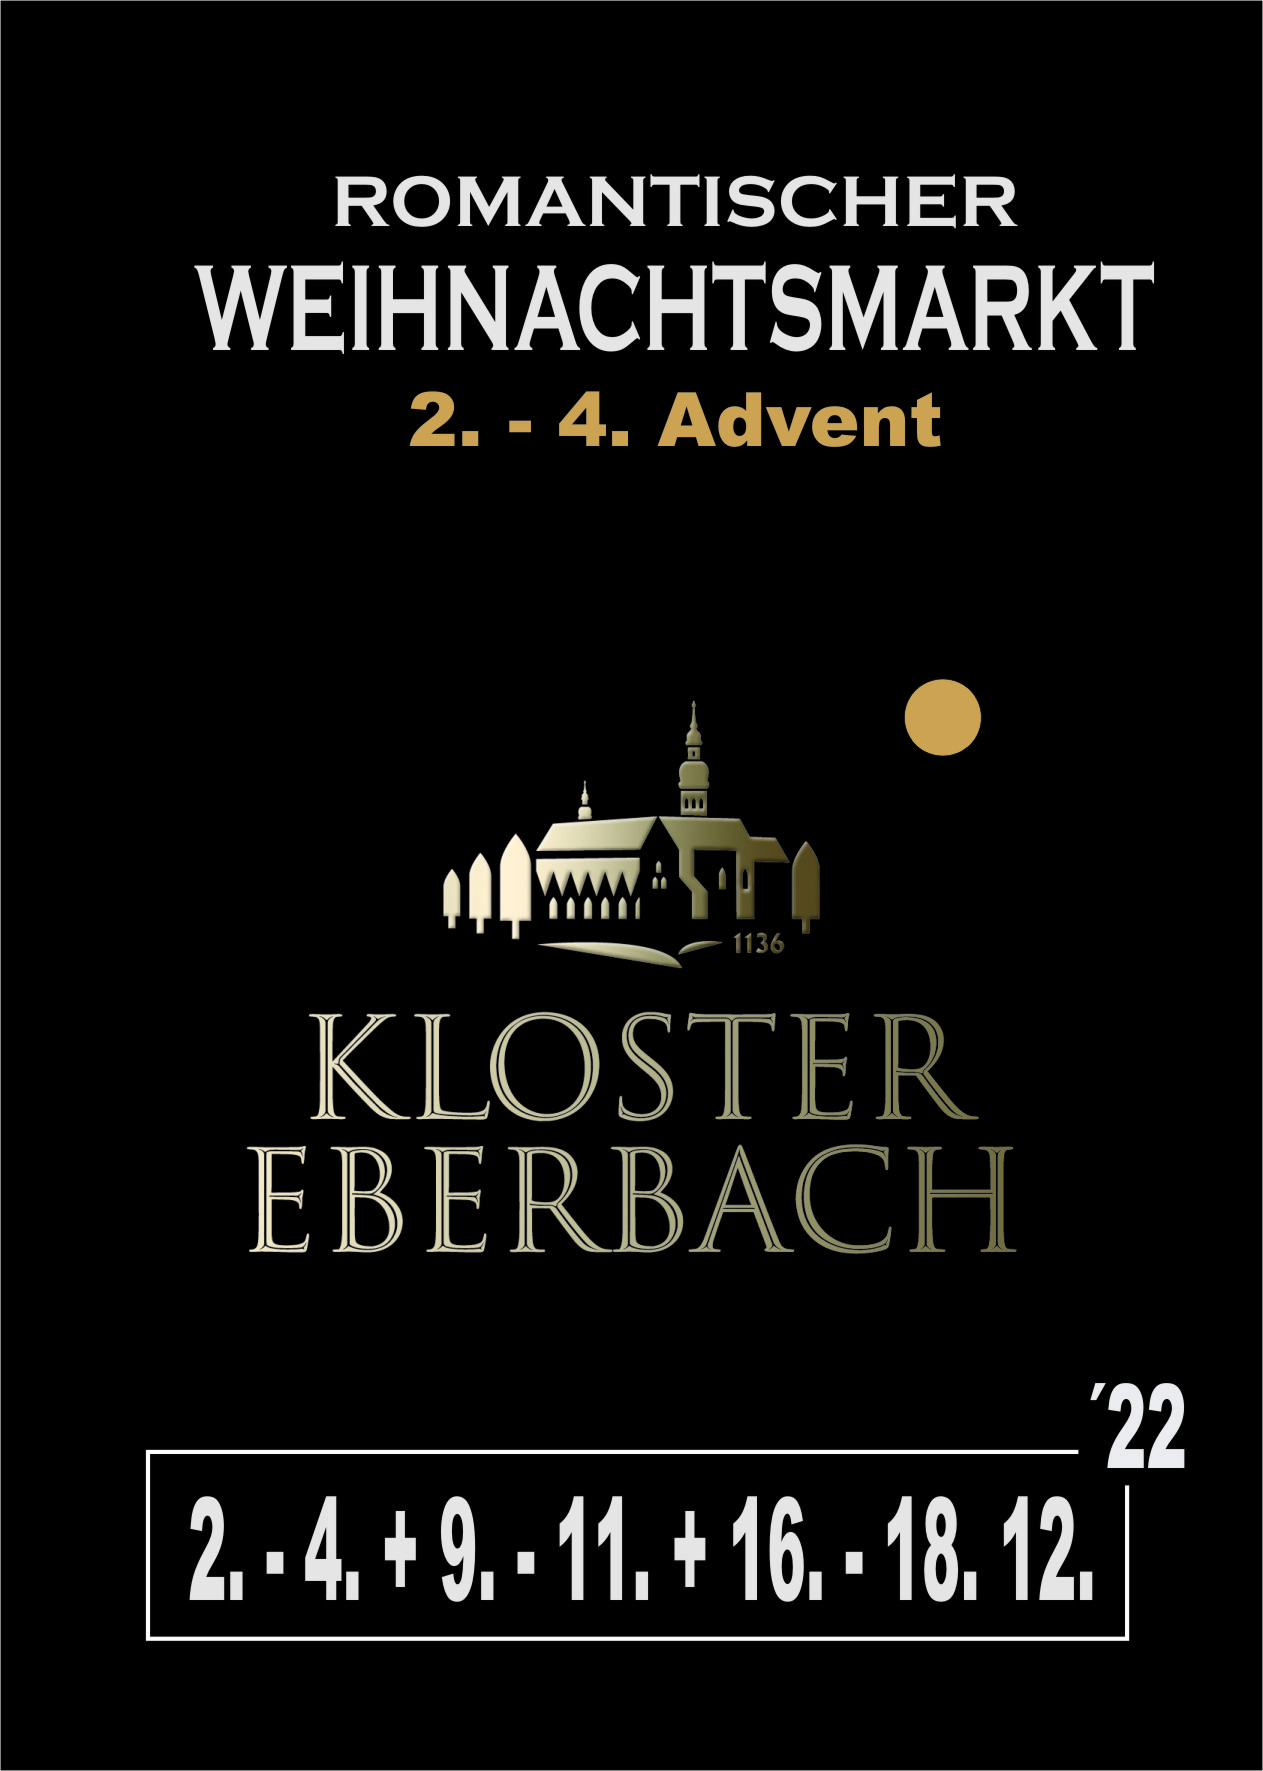 Kloster Eberbach Image